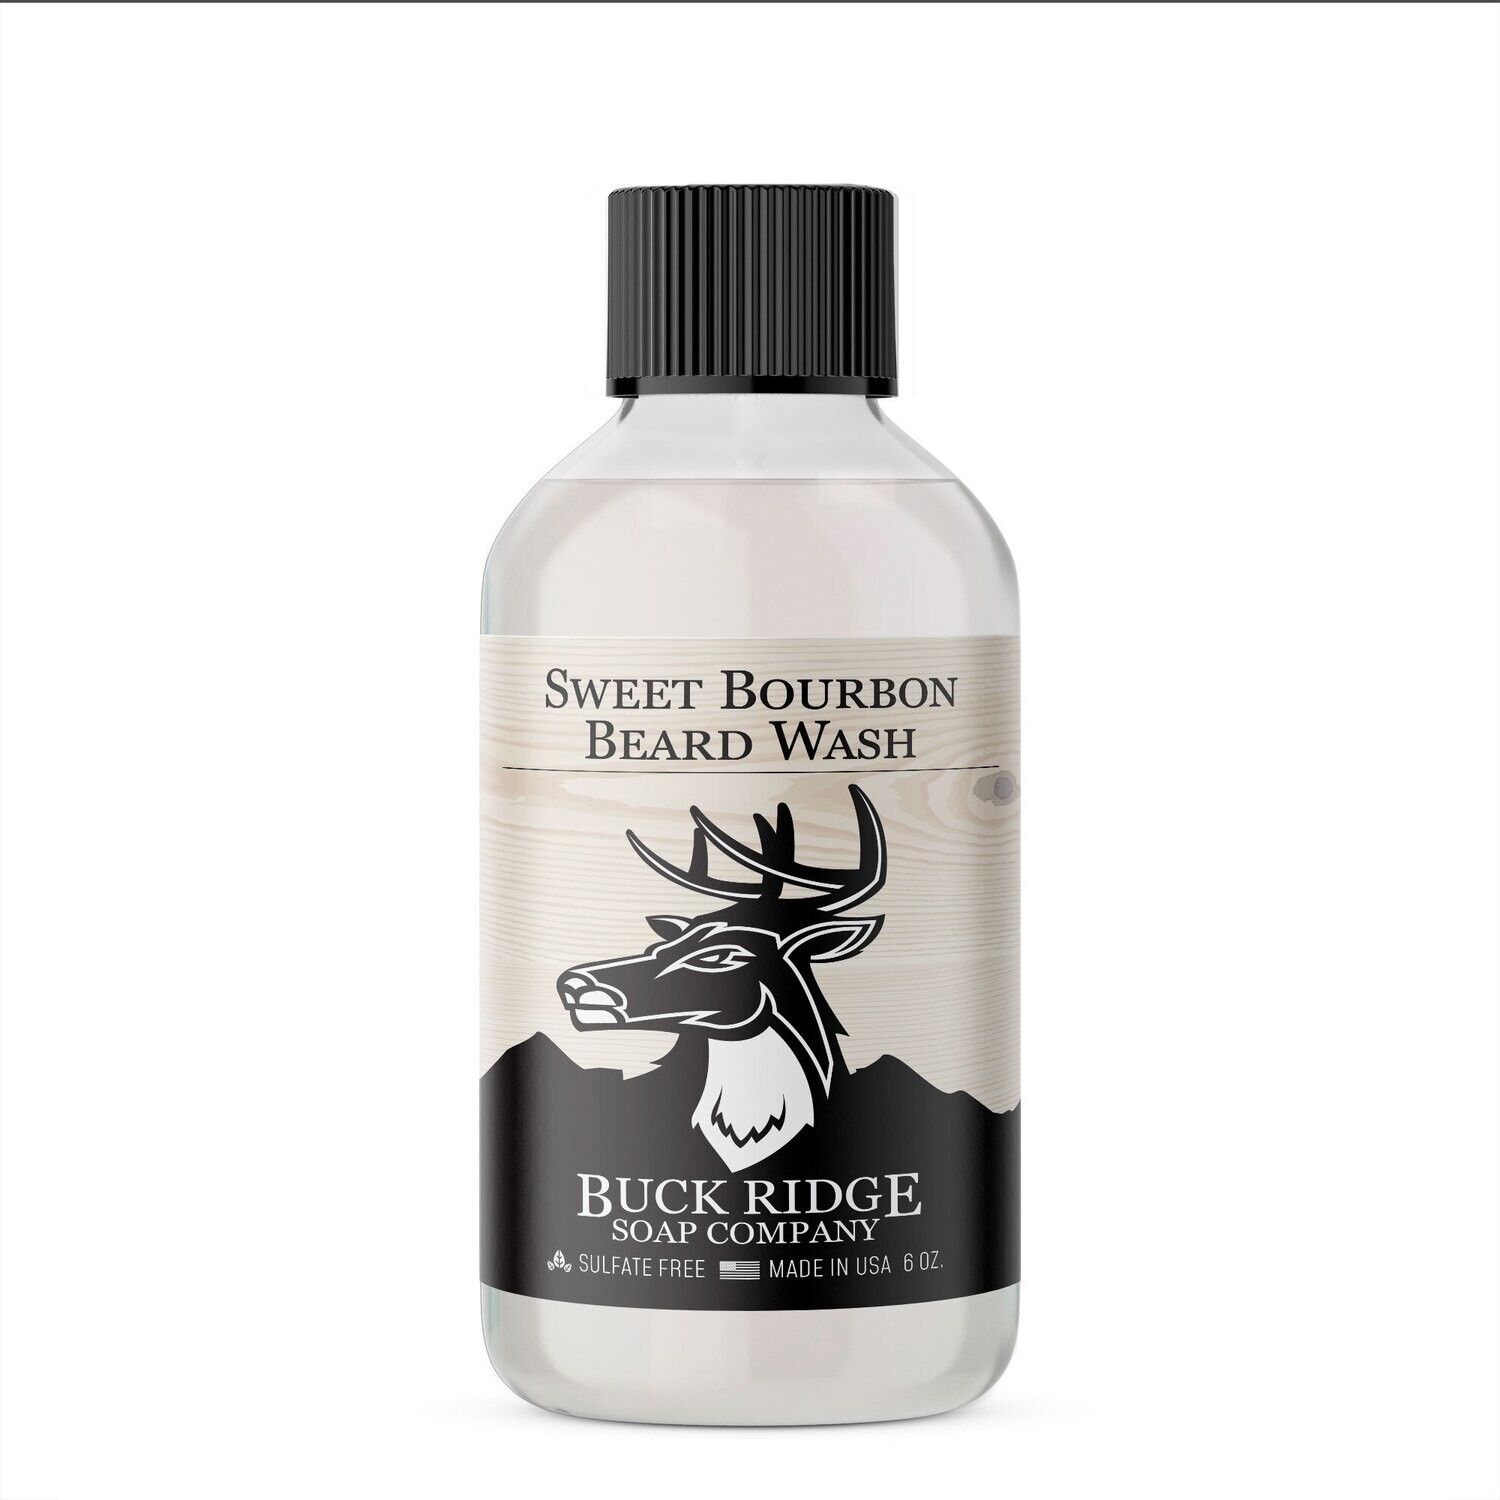 Sweet Bourbon Beard Wash by Buck Ridge